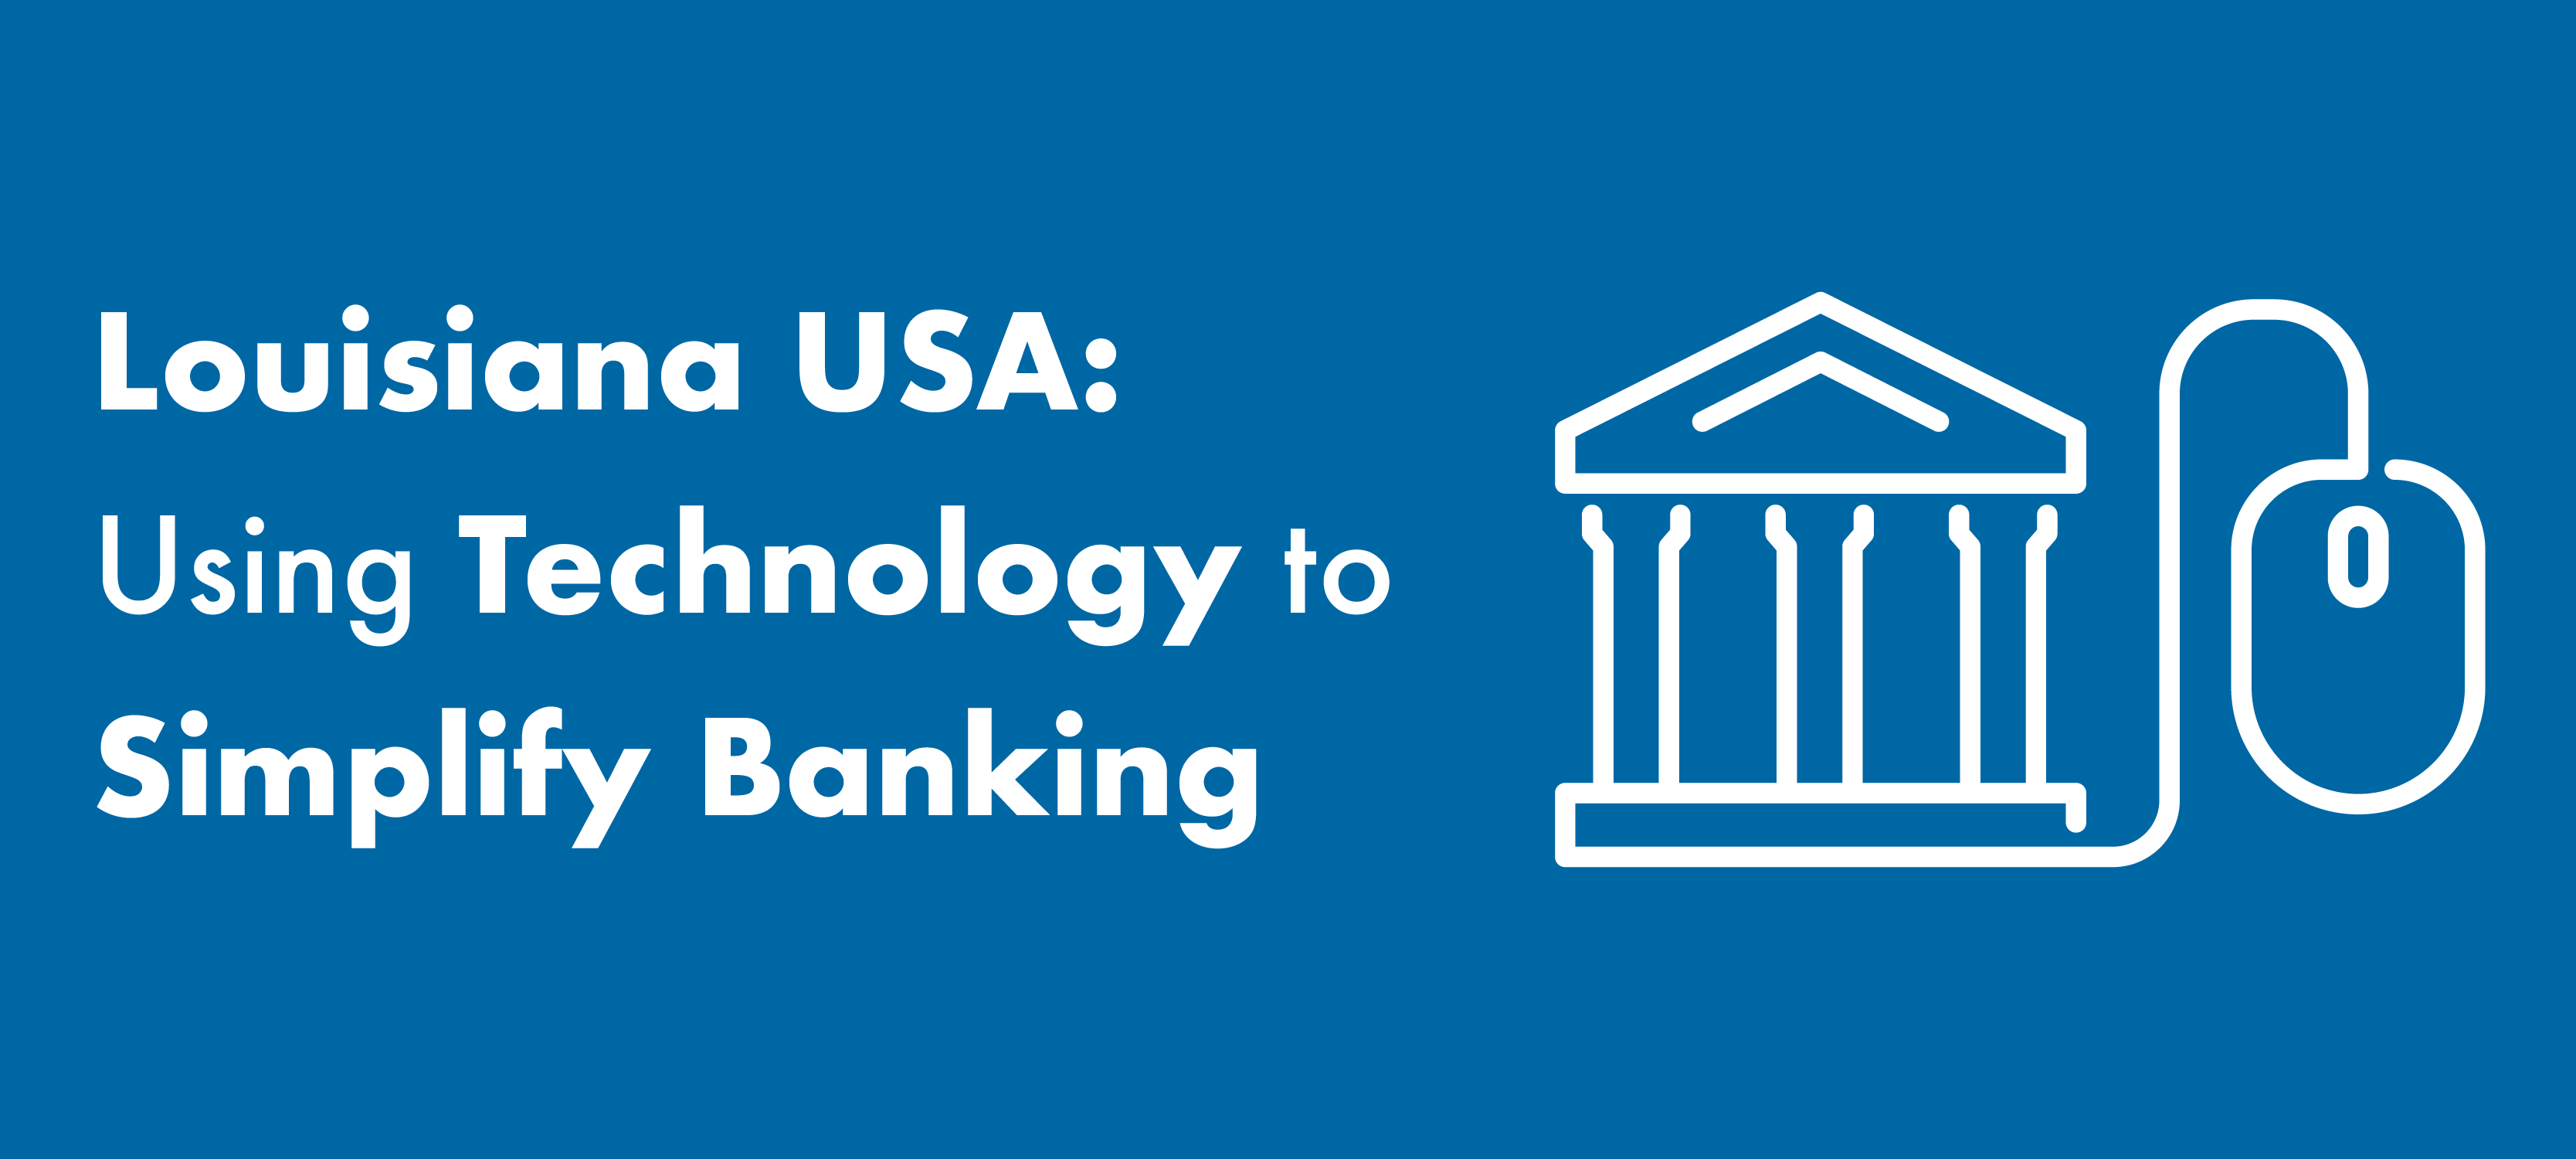 Louisiana USA: Using Technology To Simplify Banking